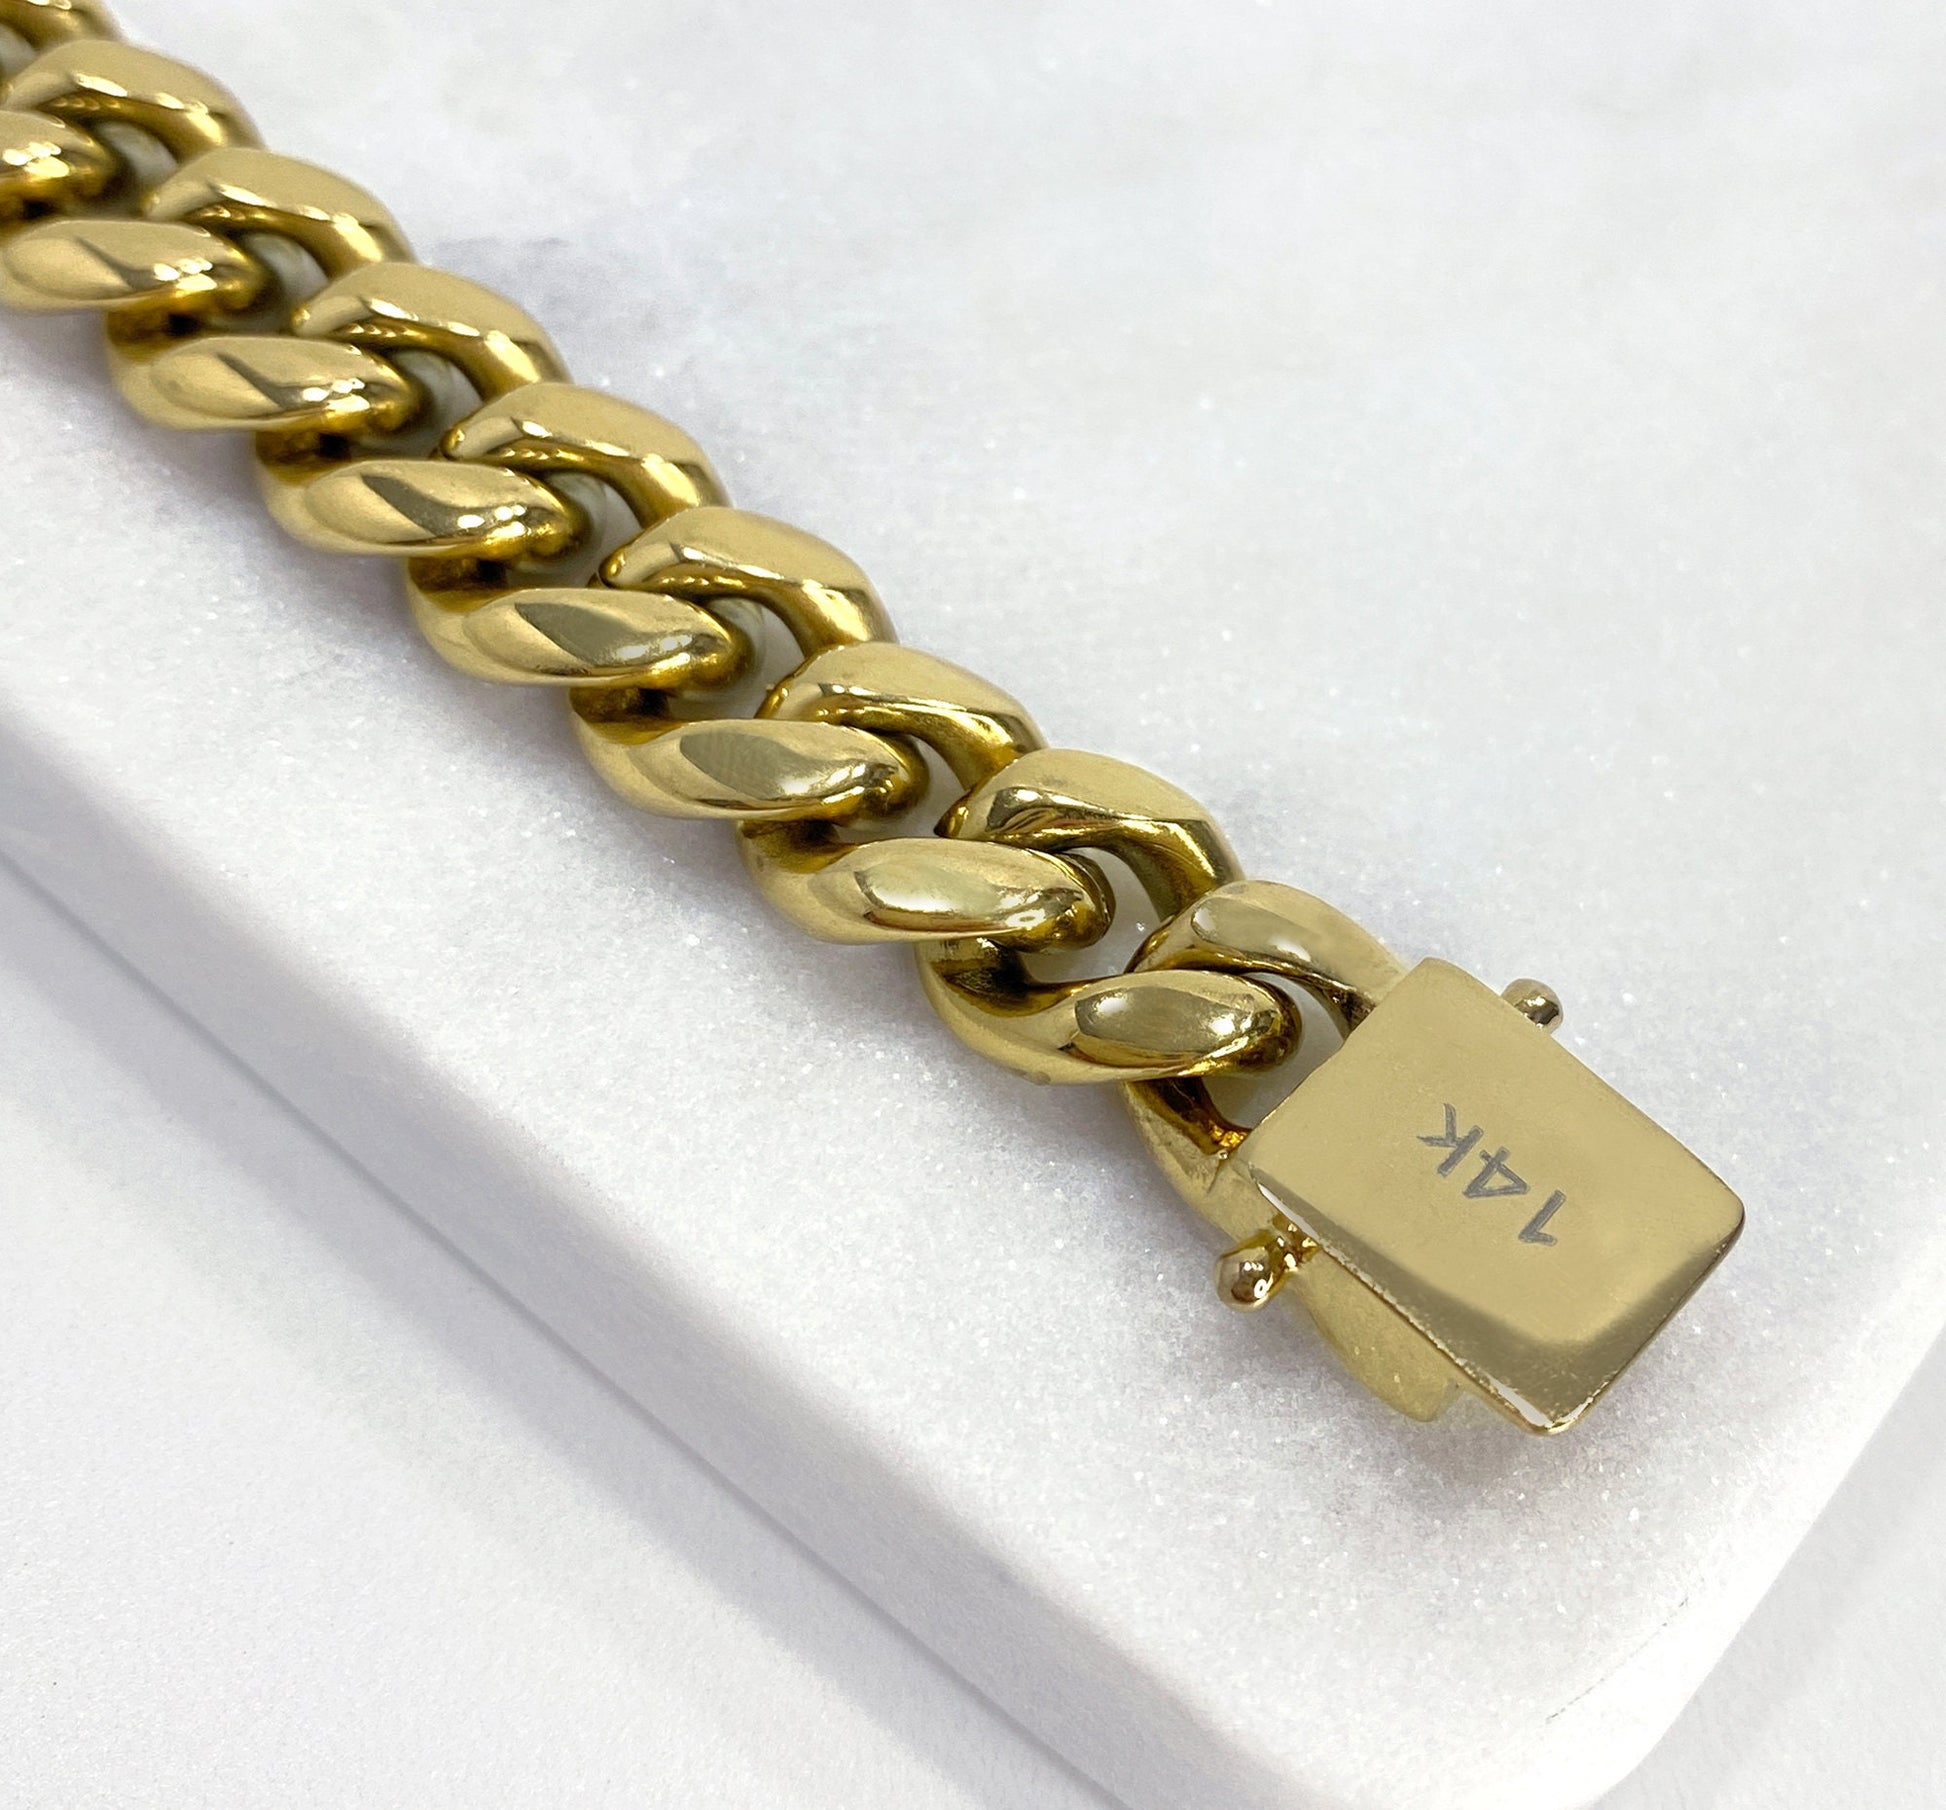 Double Link Bracelet 14K Yellow Gold 7 Length